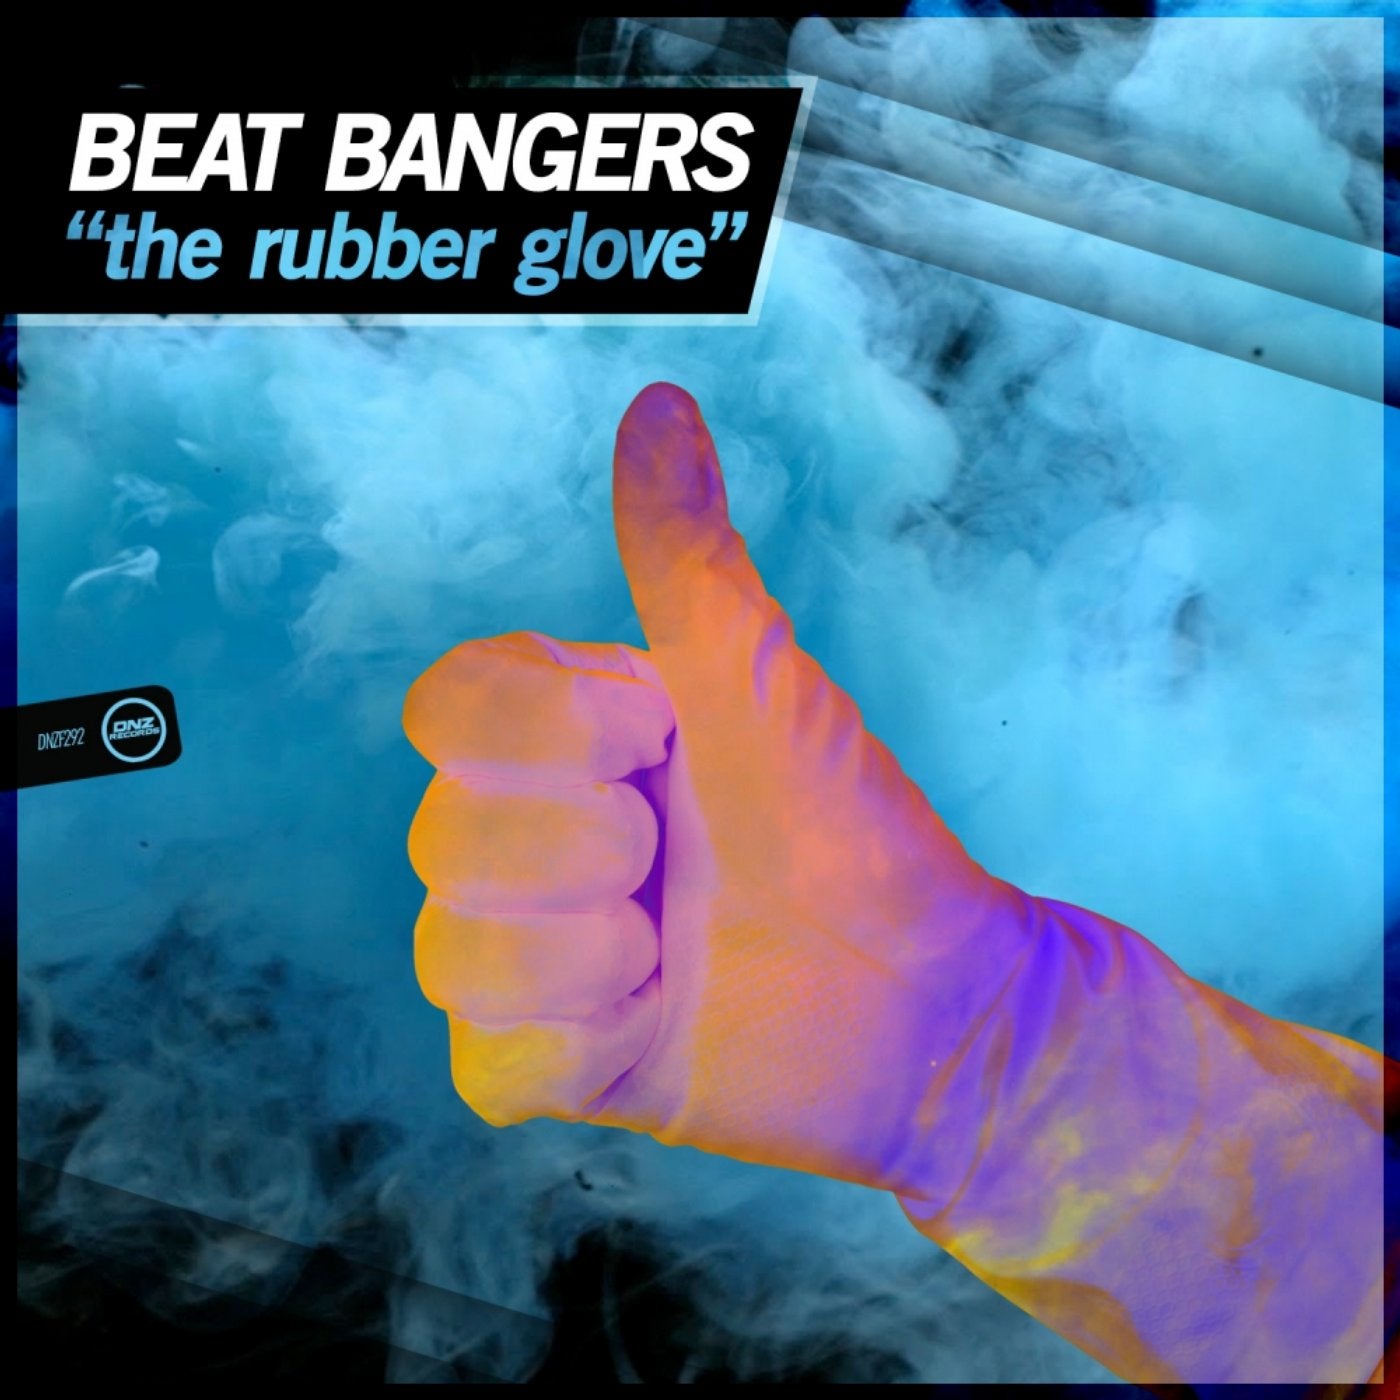 The Rubber Glove